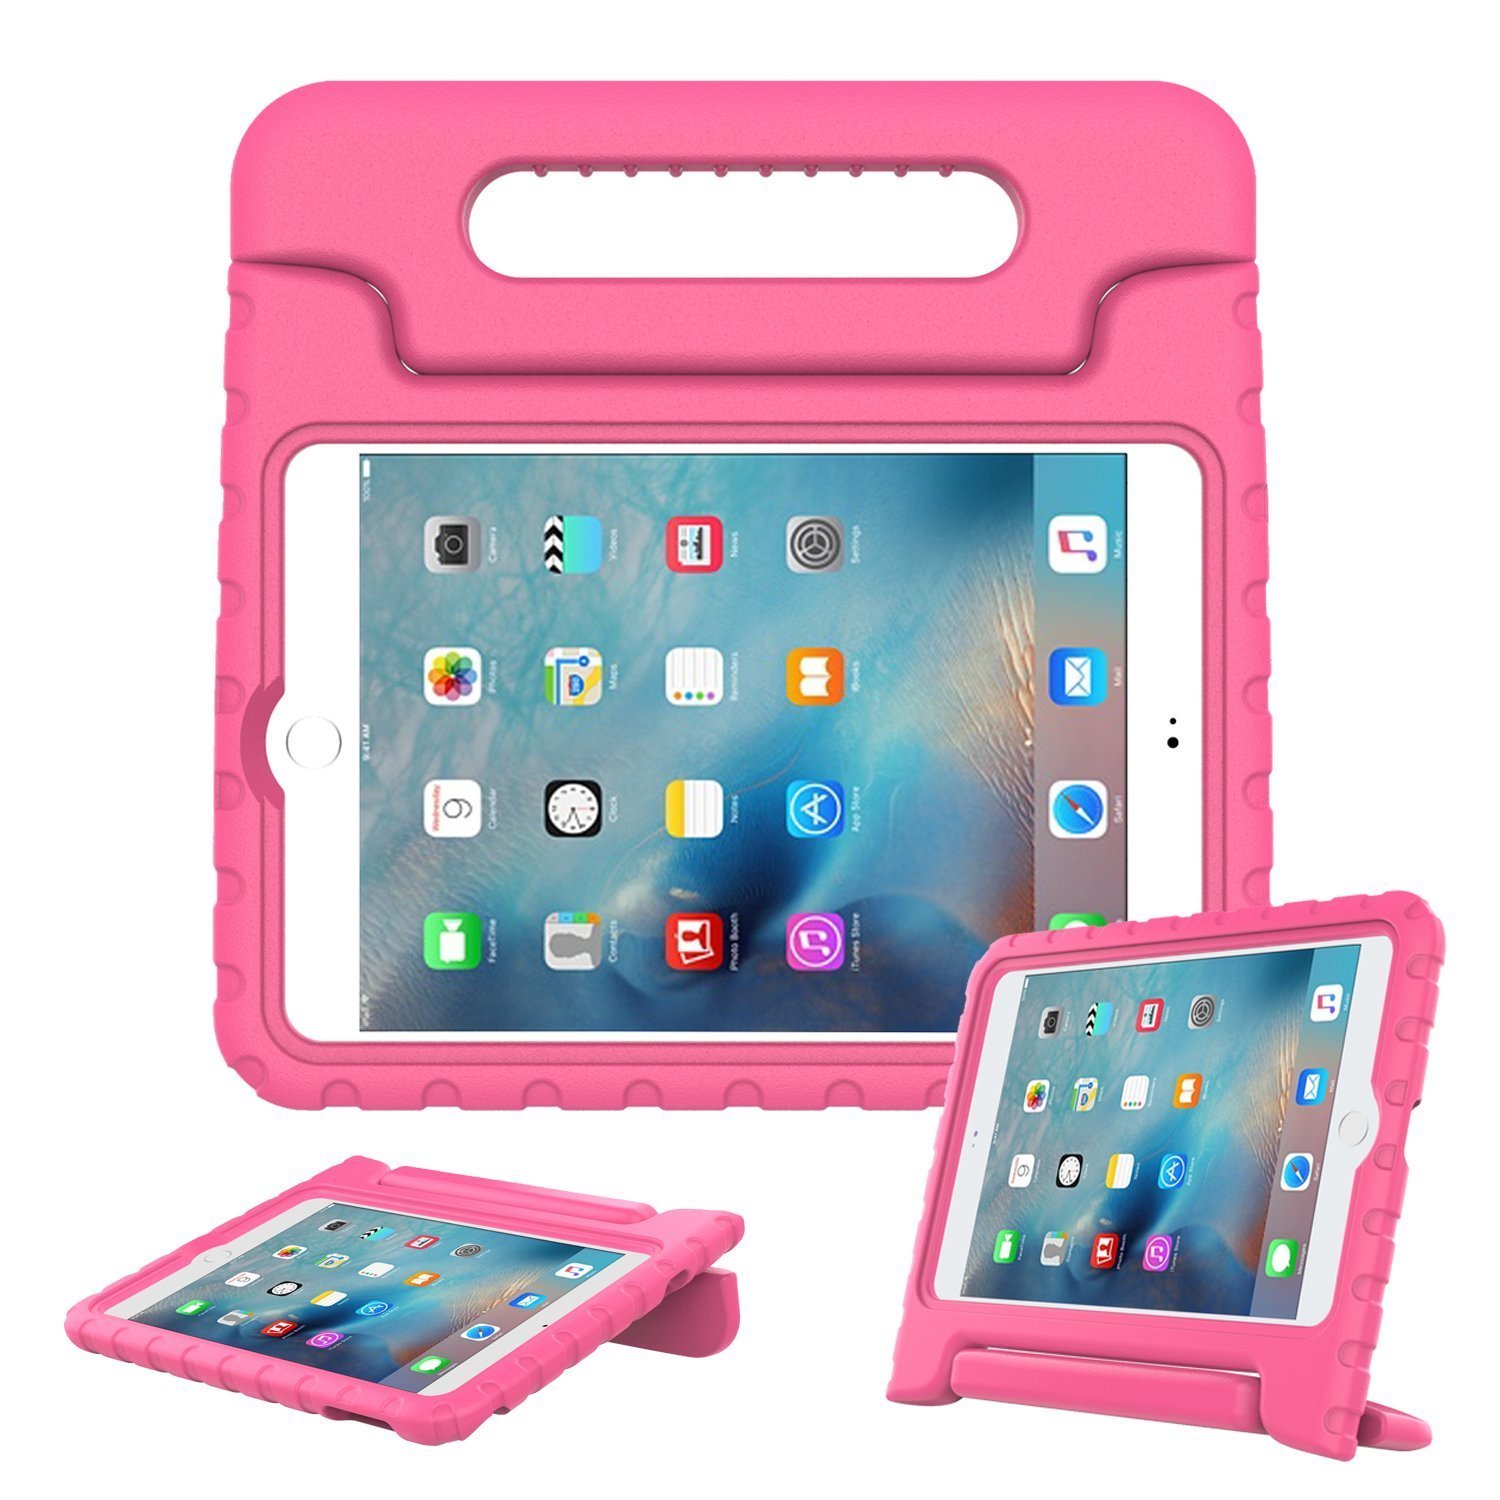 iPad Mini 4 Cases, best iPad Mini 4 Cases, new iPad Mini 4 Cases, new iPad cases, iPad Mini 4 Case, iPad Mini 4 Cover, iPad mini accessories, iPad mini cases